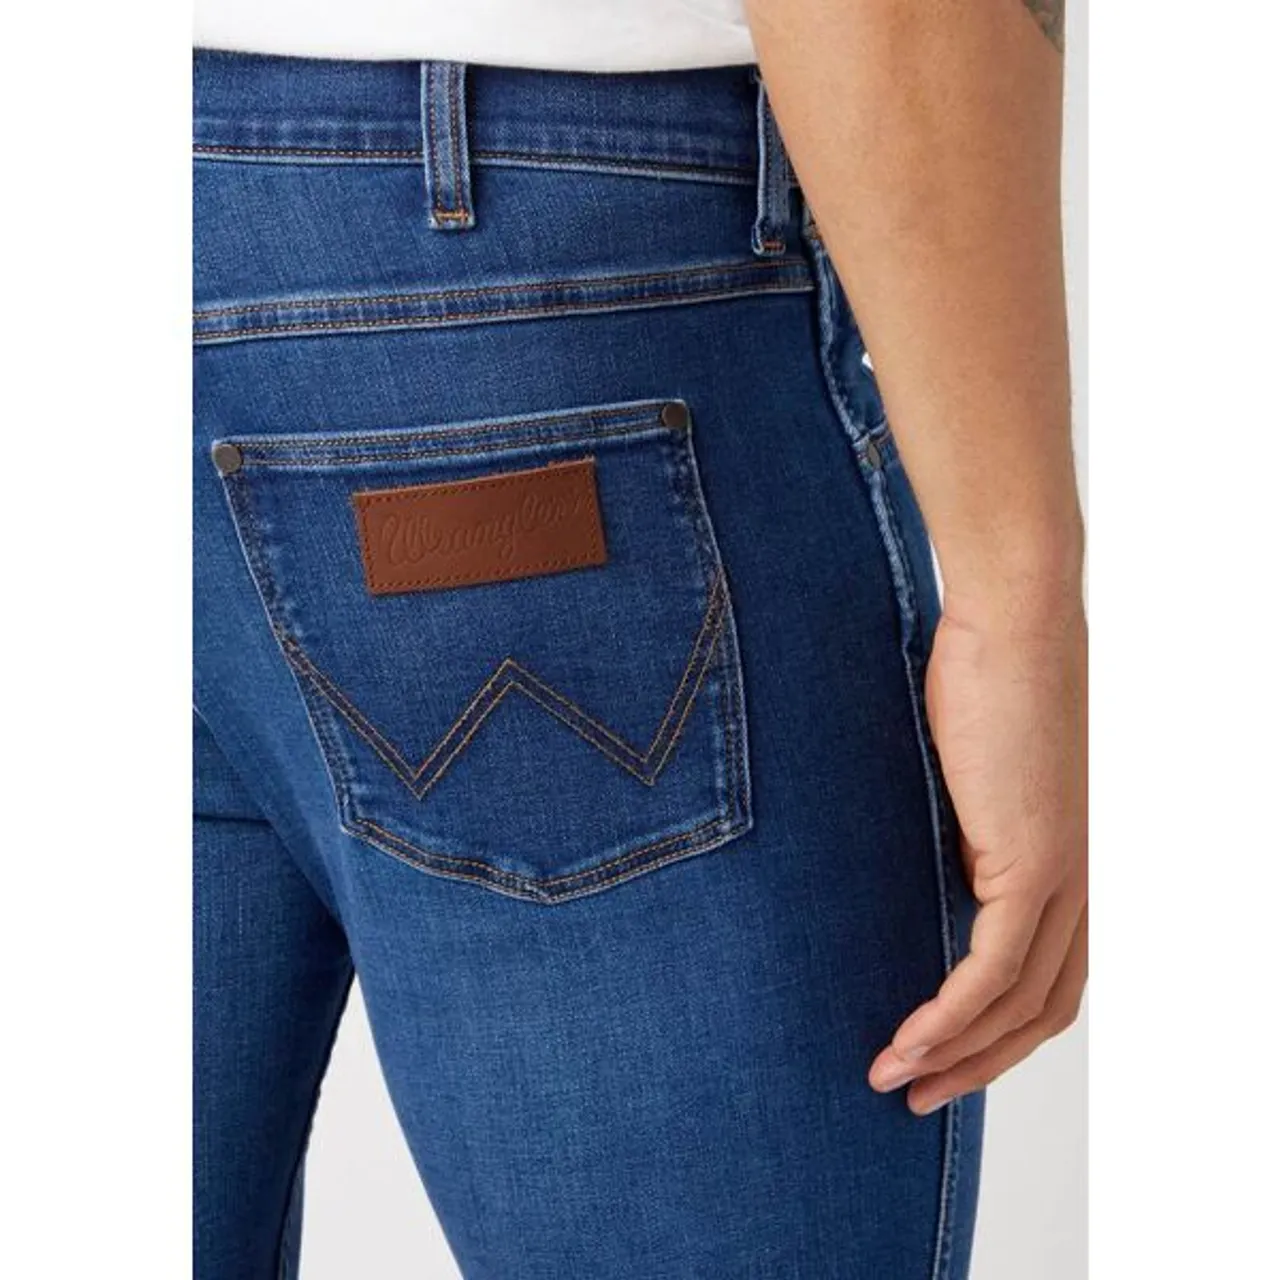 Stretch-Jeans WRANGLER "Greensboro" Gr. 36, Länge 34, blau (orion) Herren Jeans Stretch Regular Straight fit